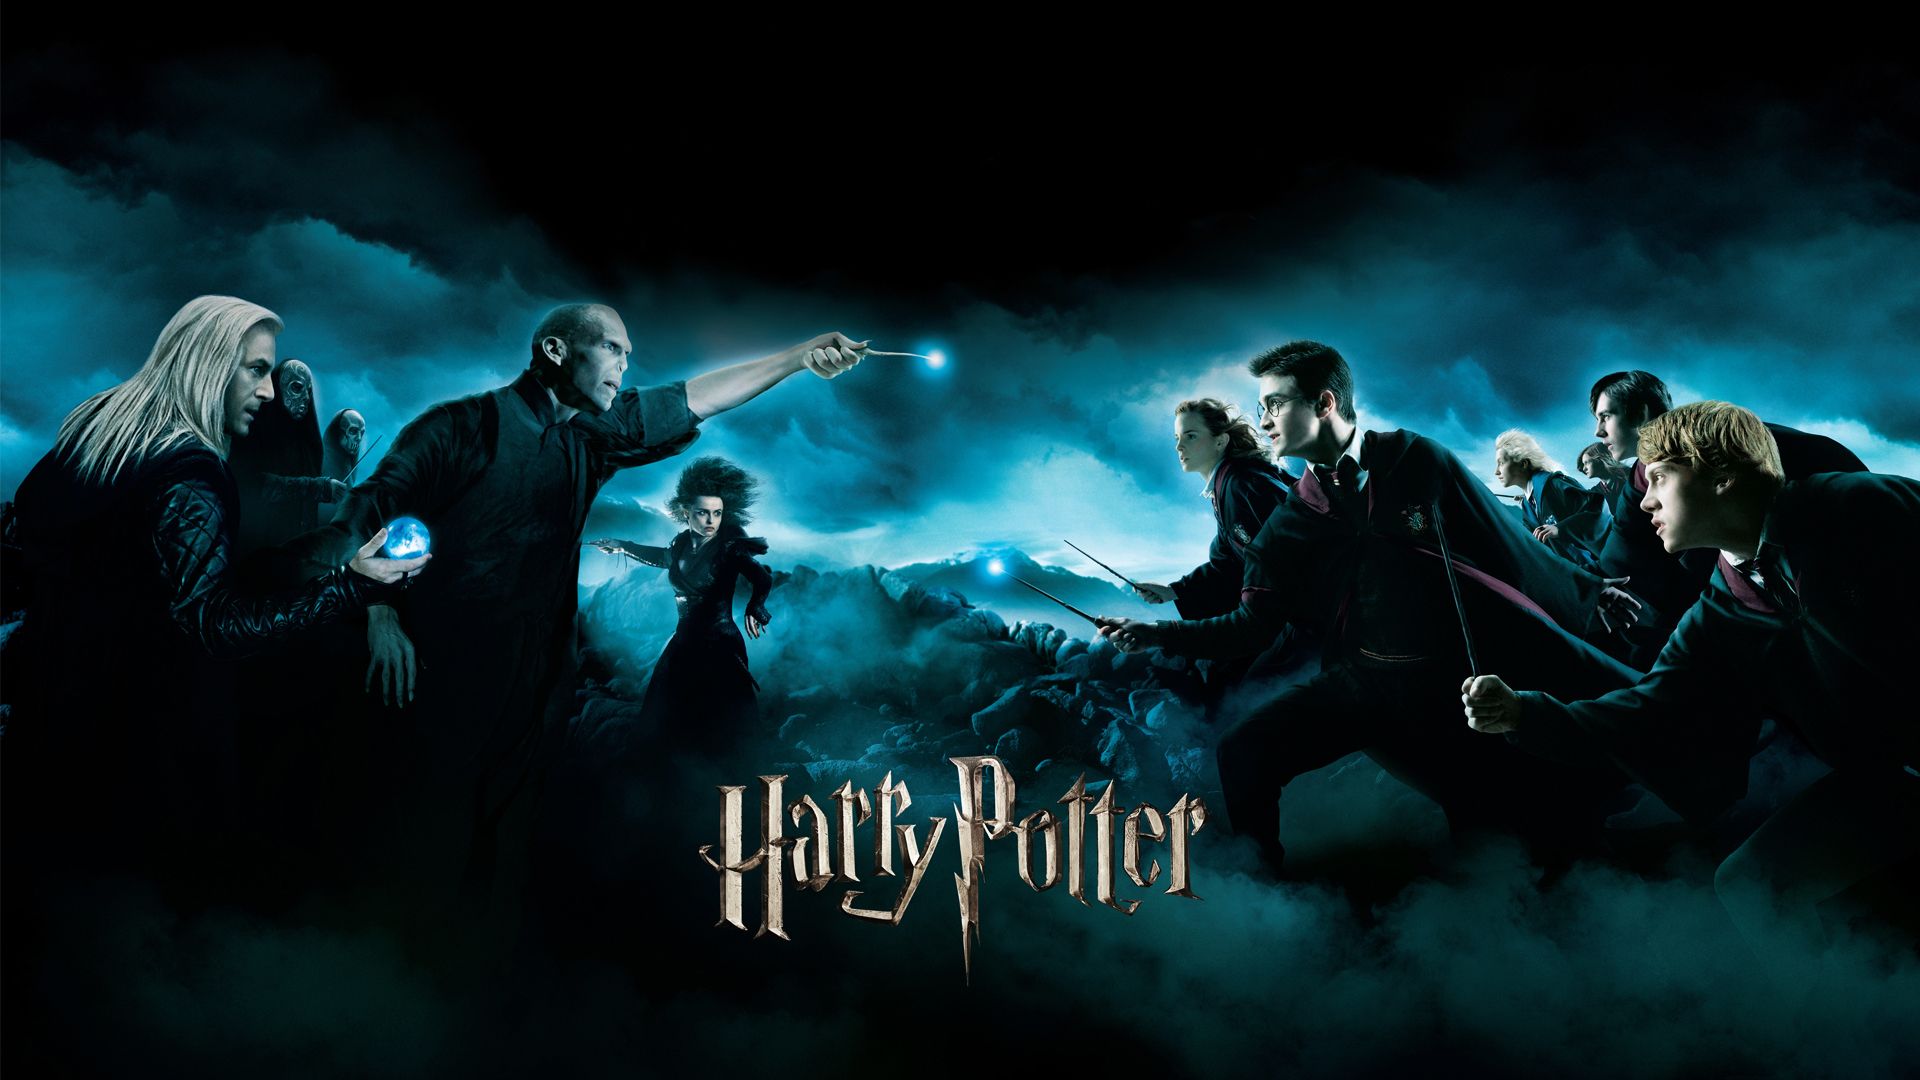 Harry Potter Background. Harry Potter iPhone Wallpaper, Harry Potter Wallpaper and Funny Harry Potter Wallpaper